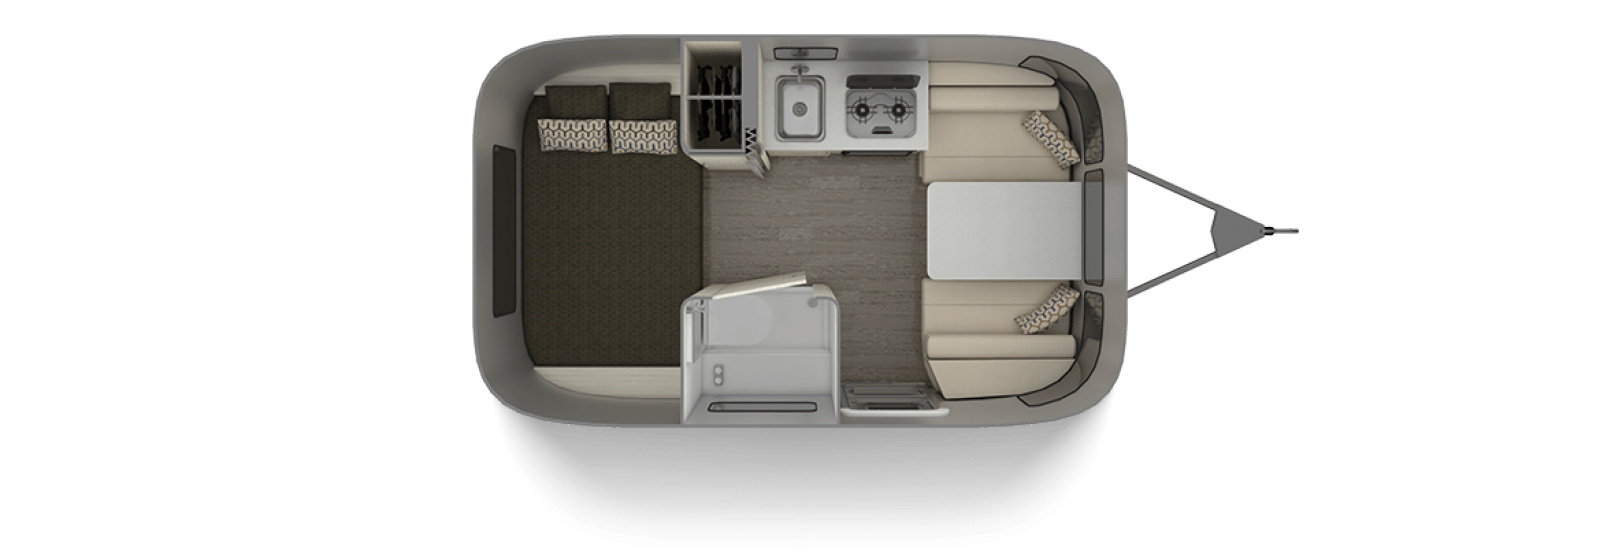 Airstream Sport 16RB Floor Plan